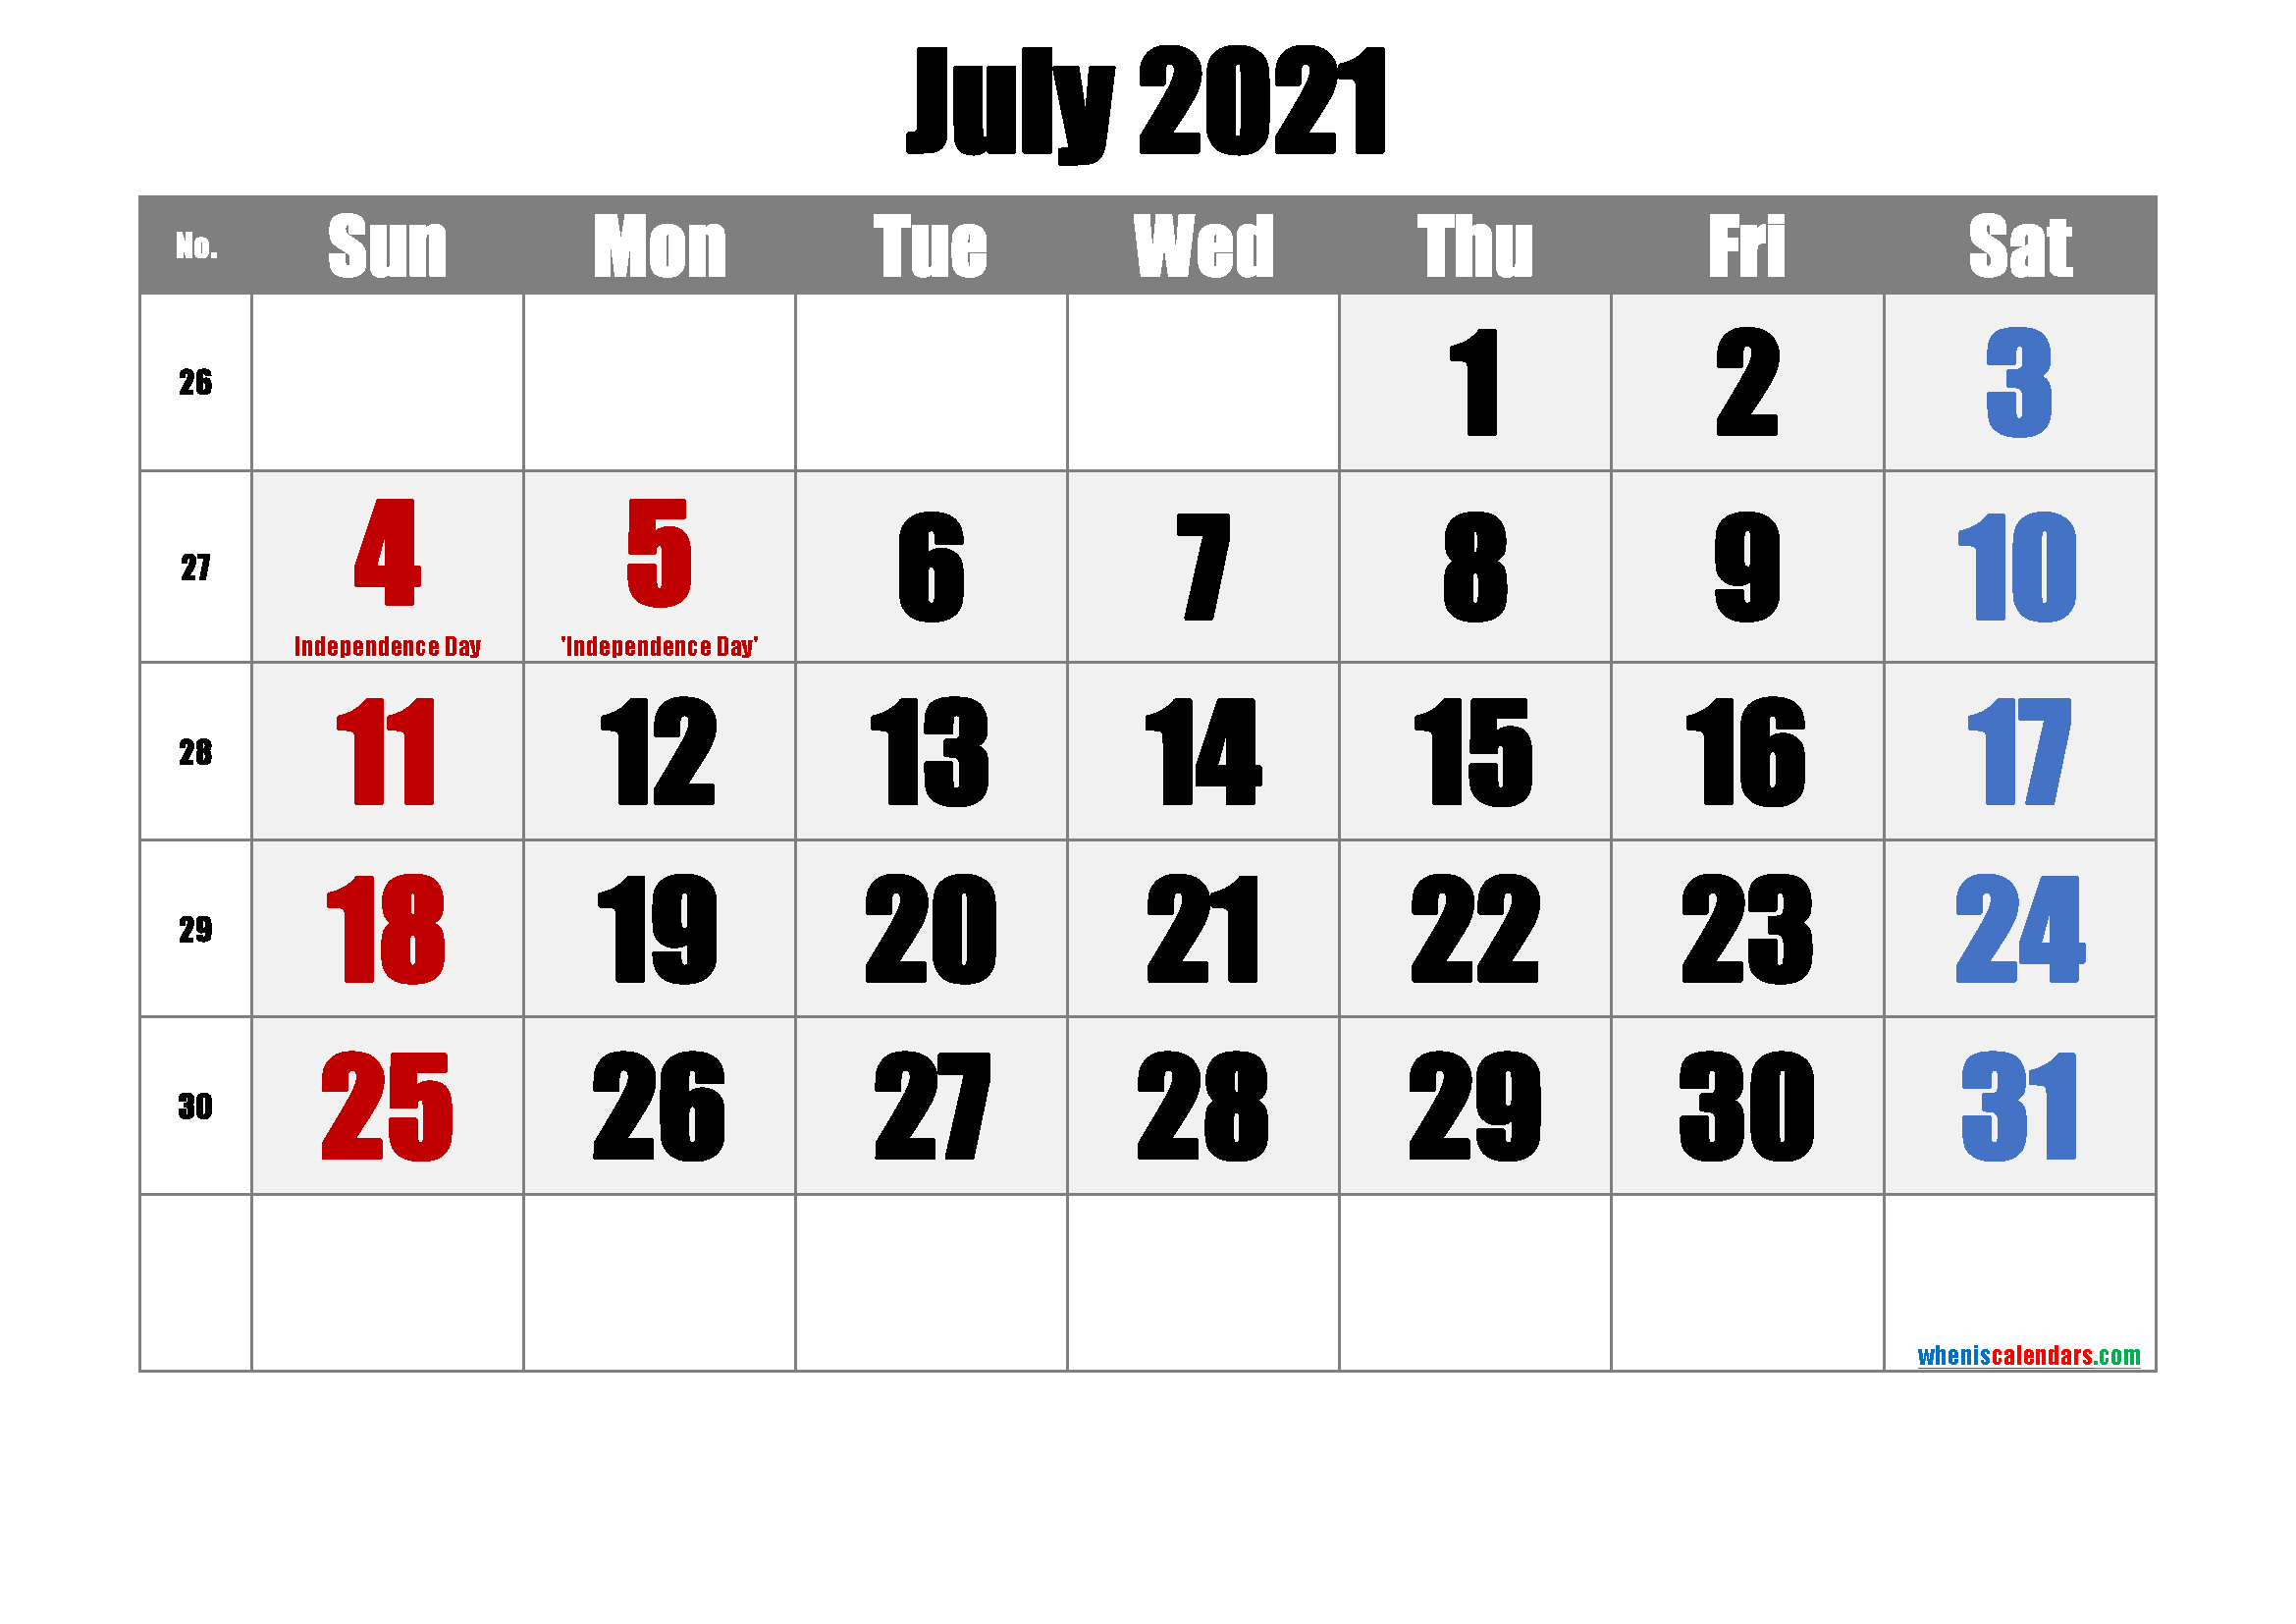 Free Printable July 2021 Calendar With Holidays Free Printable 2021